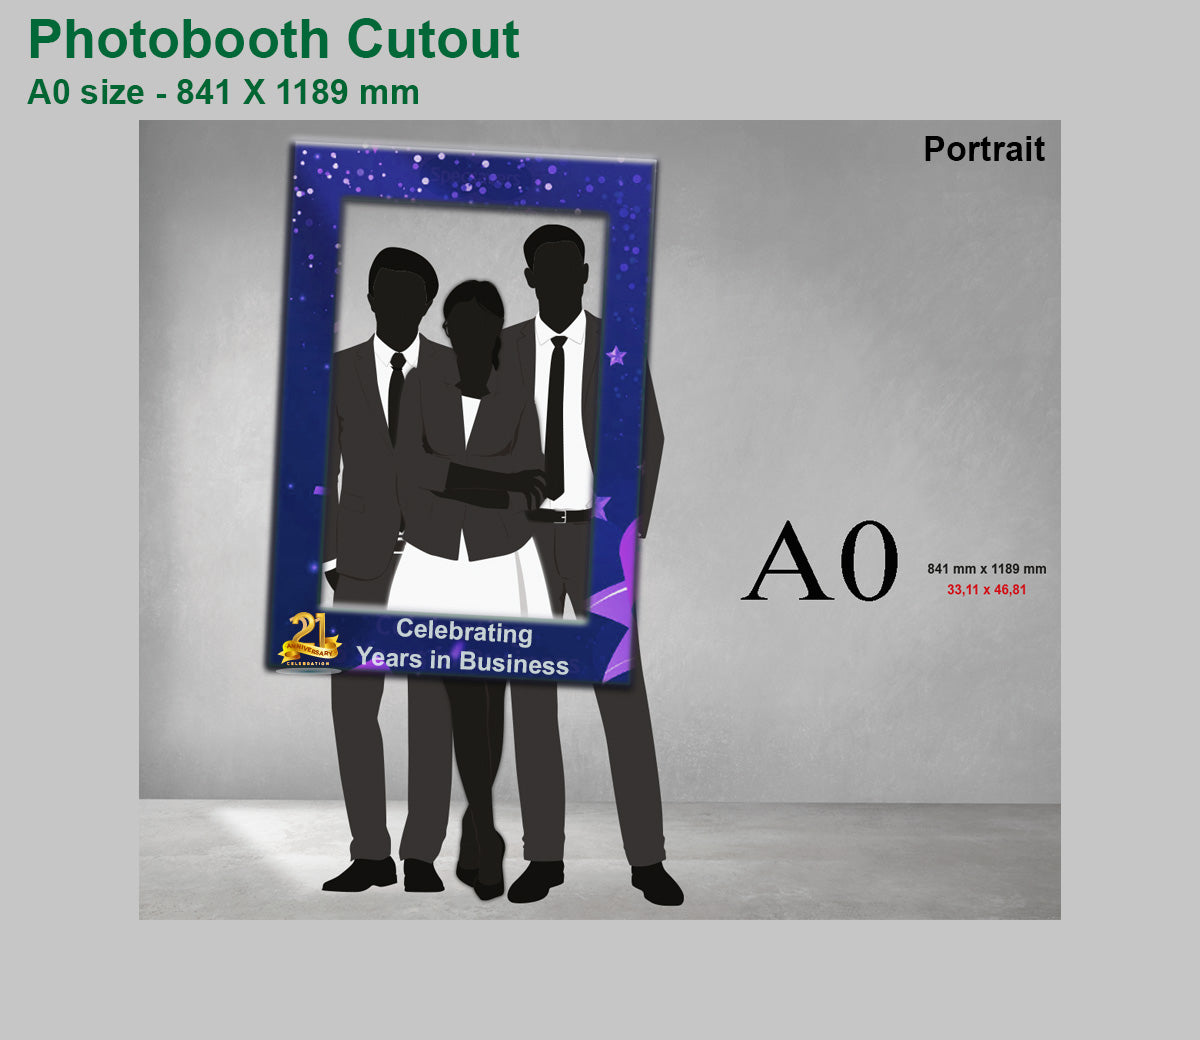 Photobooth Cutout - A0 - Portrait